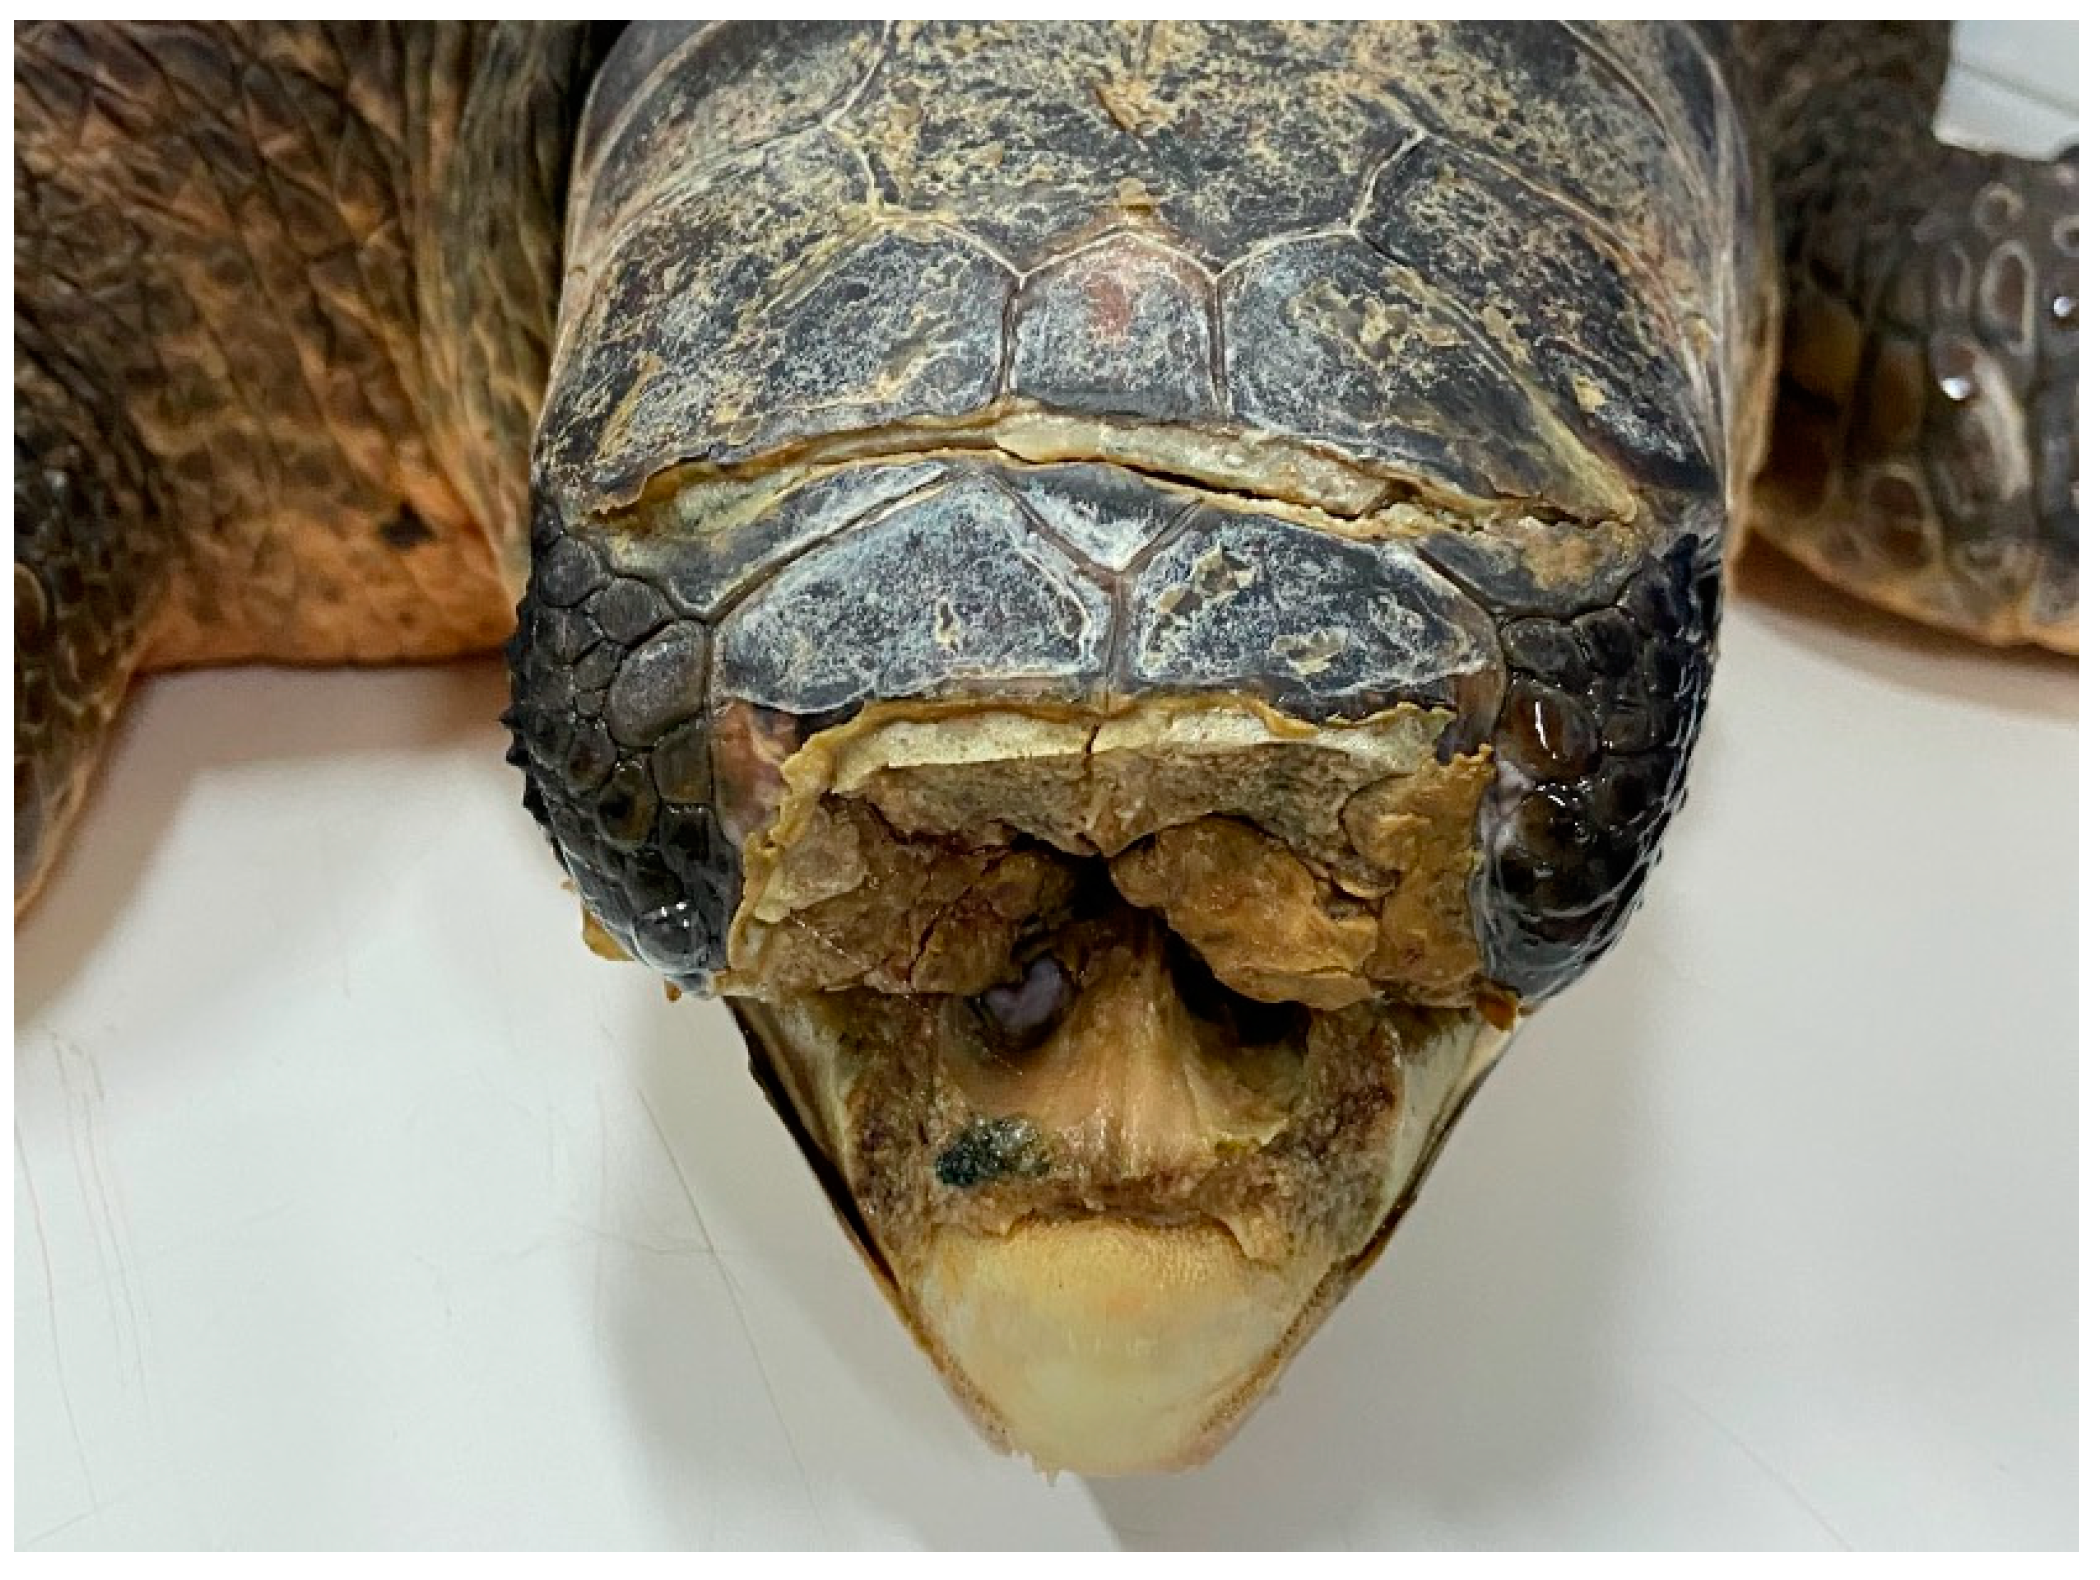 Shell injuries in tortoises - Veterinary Practice